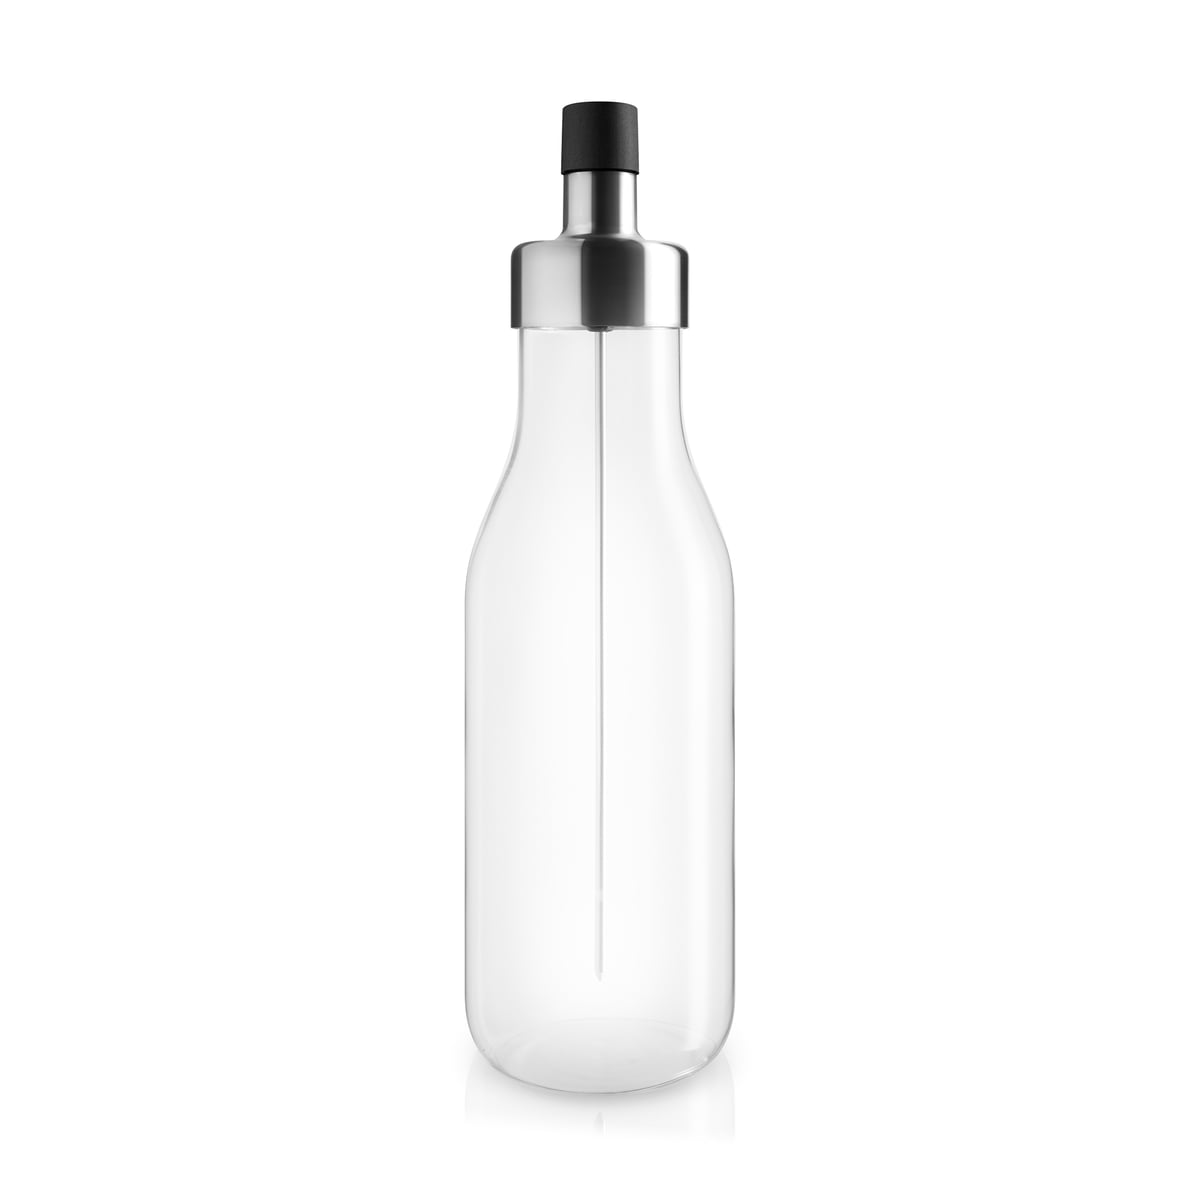 Eva Solo Oil Carafe Bottle My Flavour | Panik Design